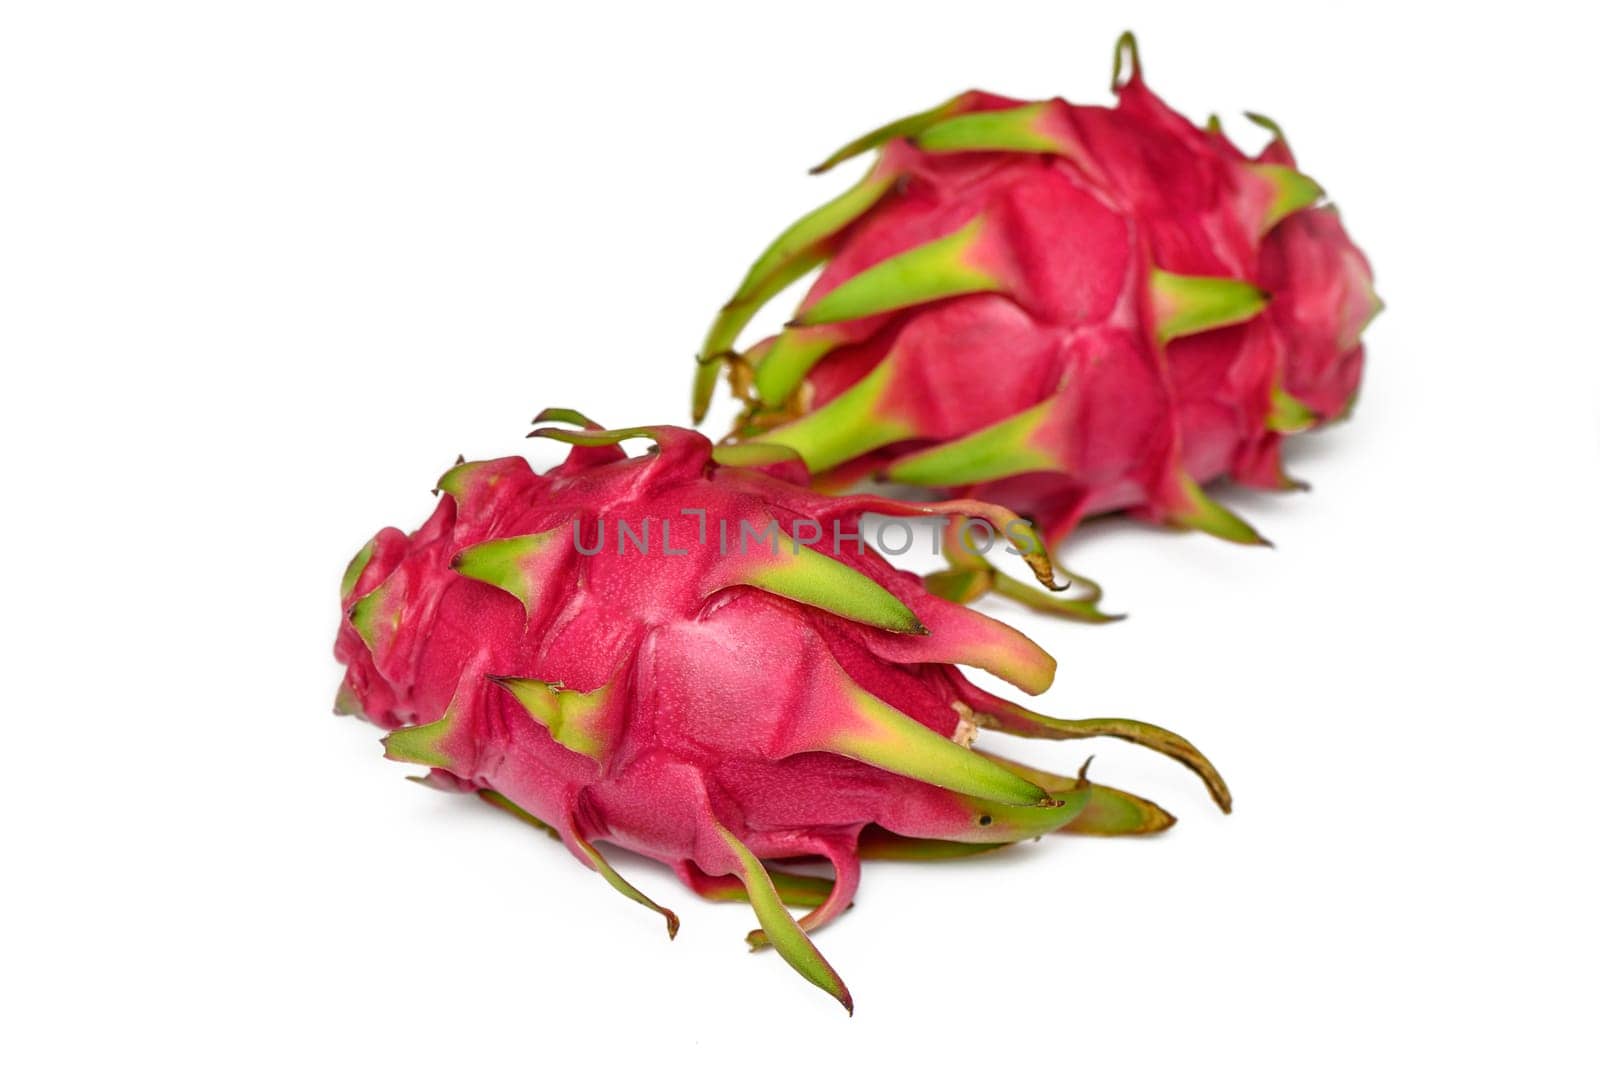 Dragon fruit or pitaya isolated on white background, by Mixa74